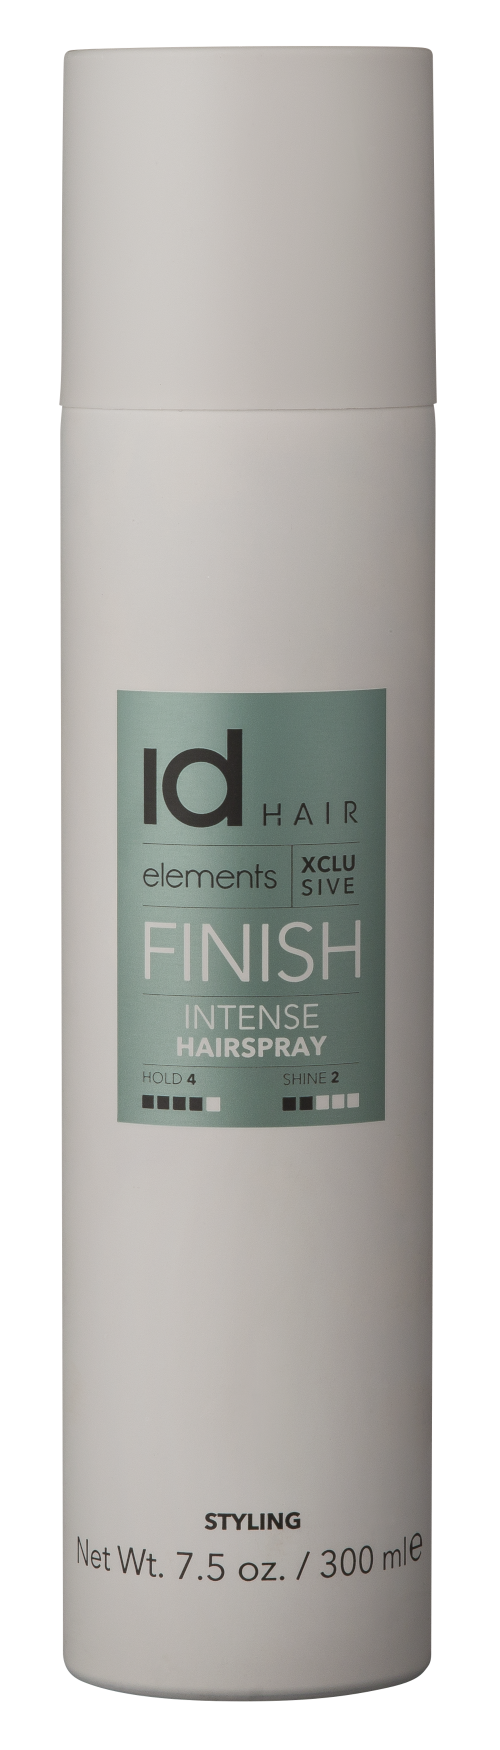 Hvid spray med turkis metallic logo. Id Hair Elements Xclusive Intense Hairspray.